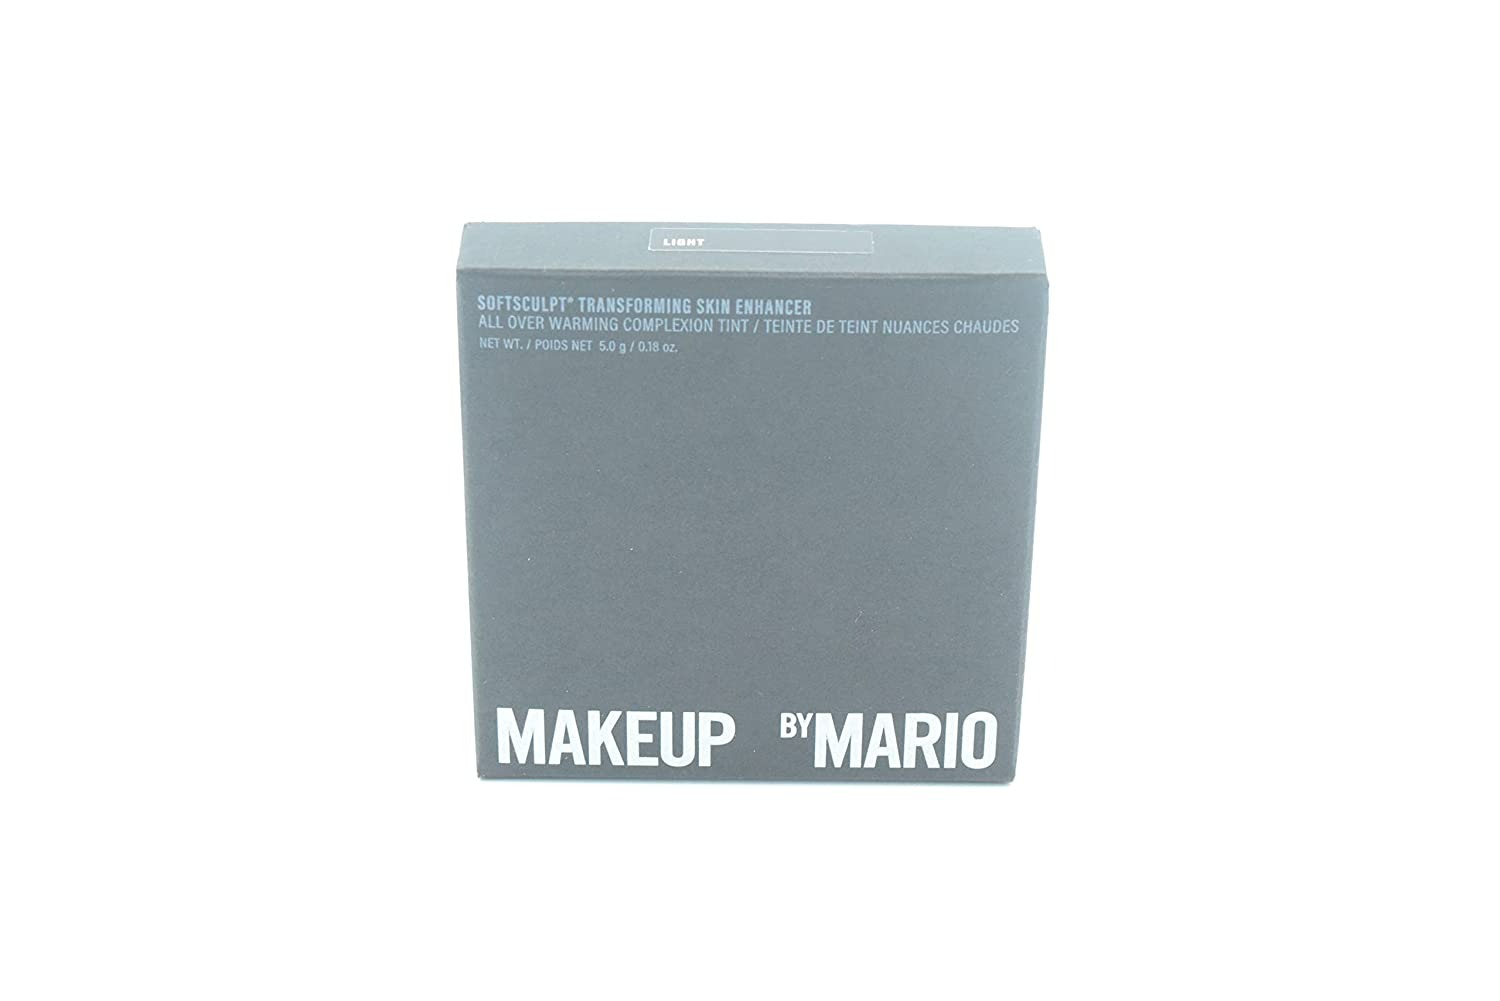 Makeup by Mario SoftSculpt Transforming Skin Enhancer-2